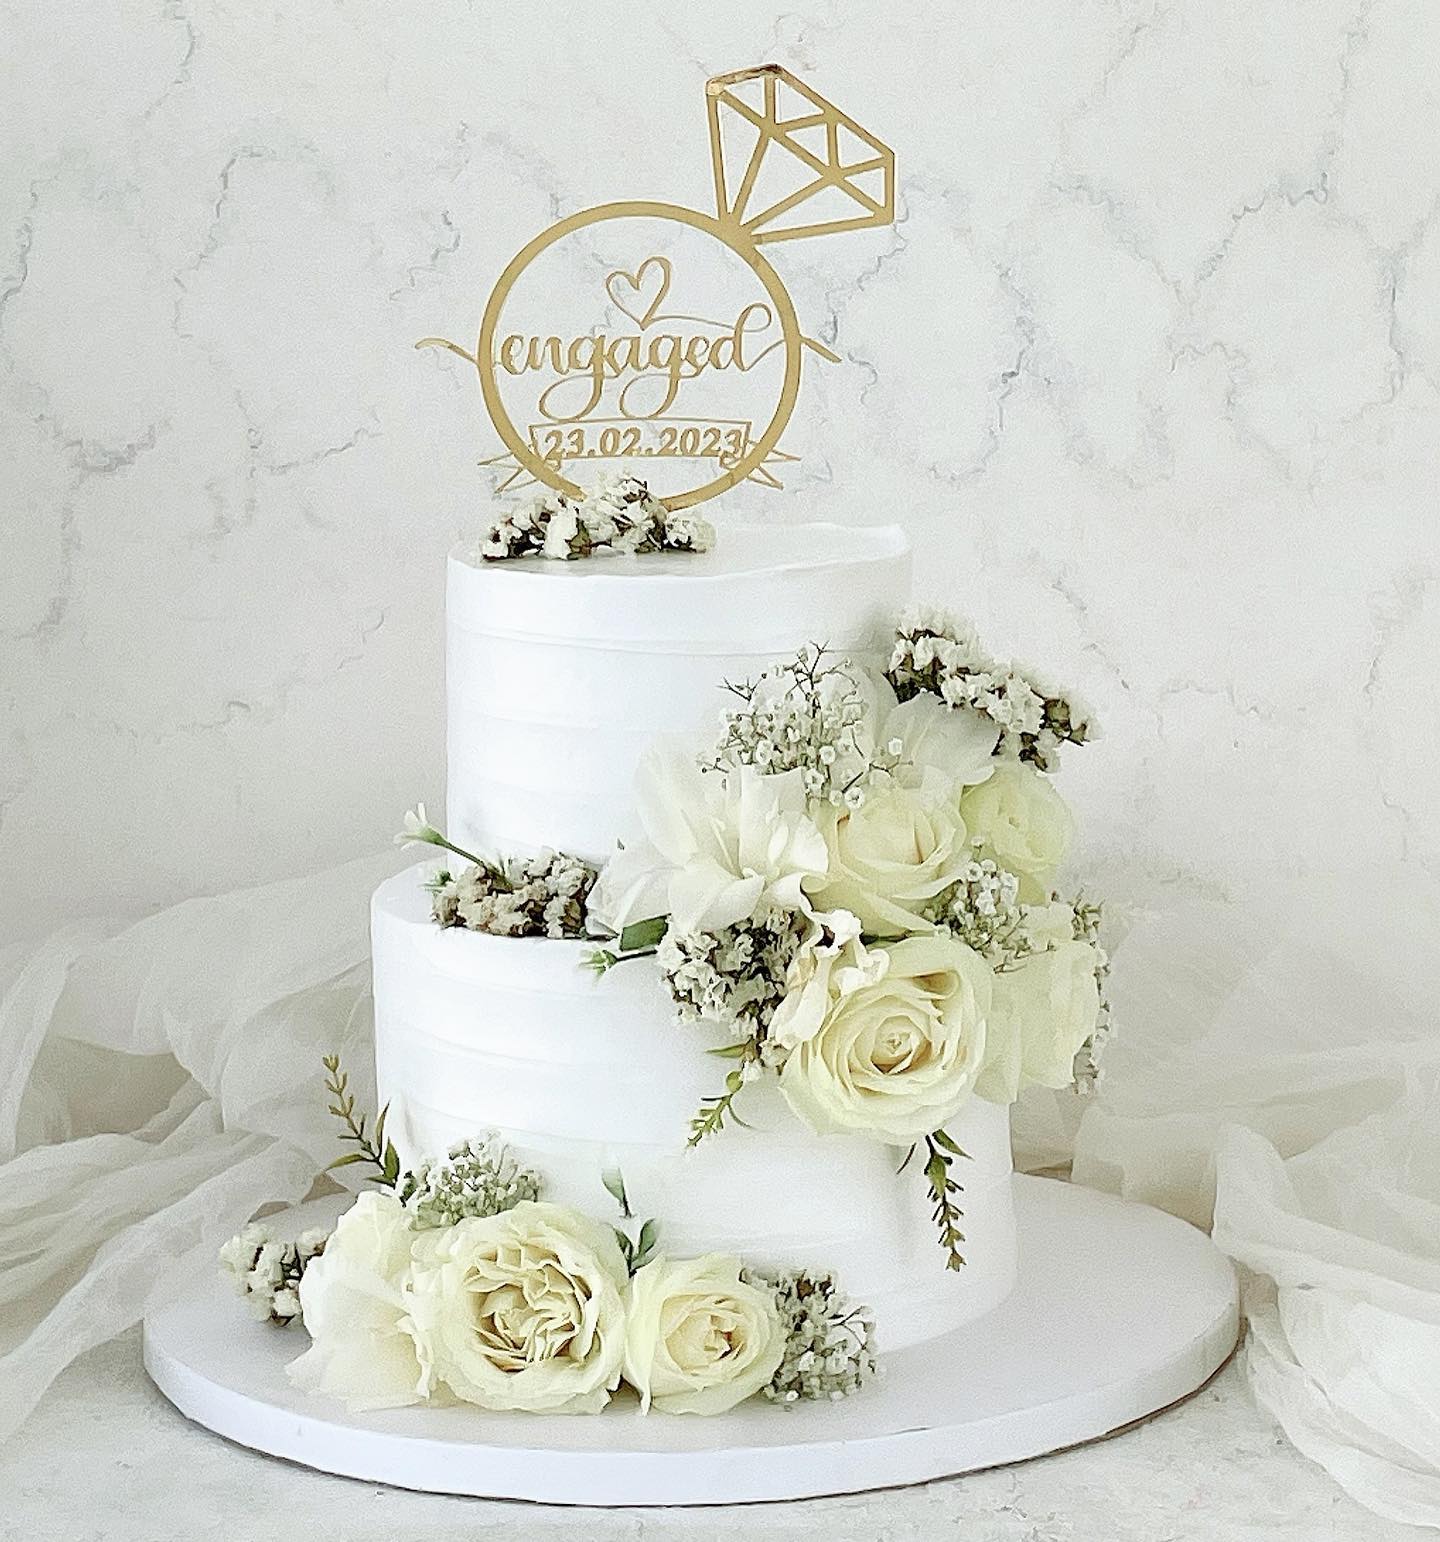 5 Amazing Engagement Cake Designs 2020